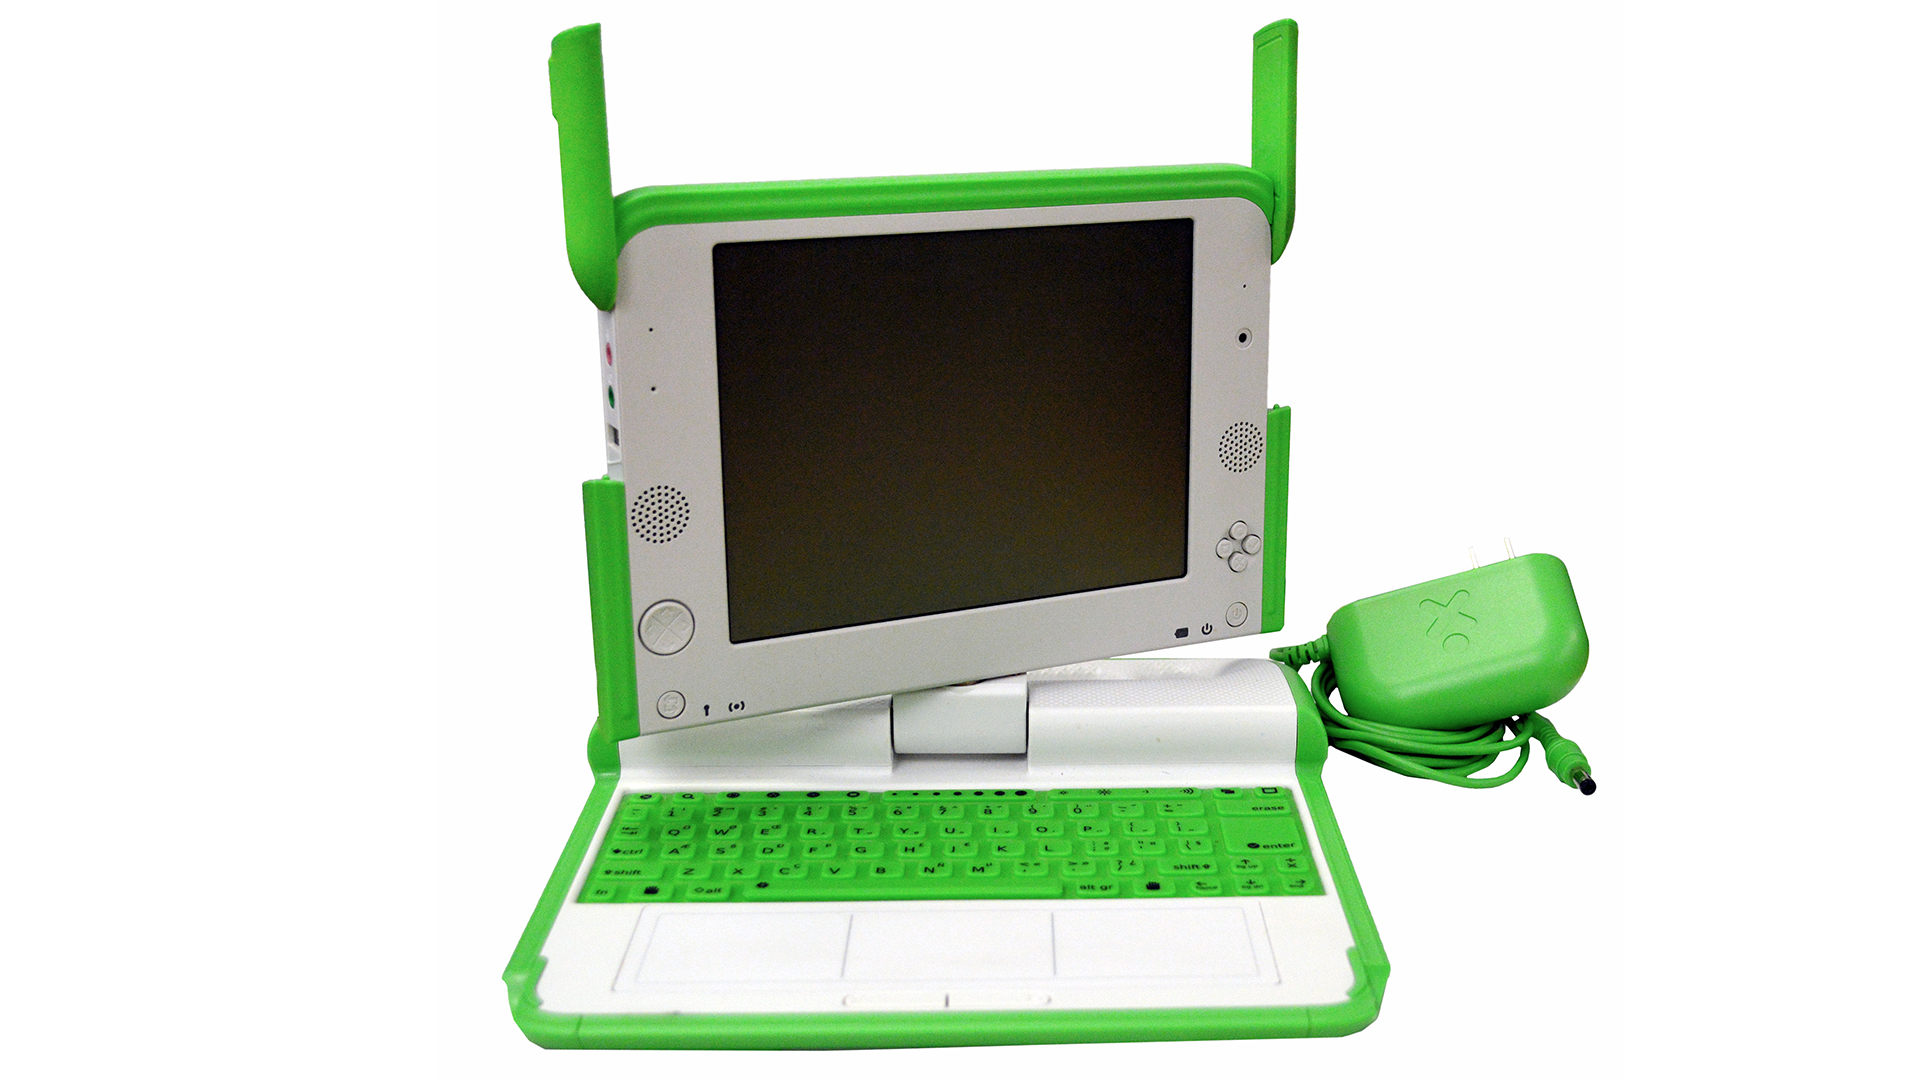 OLPC XO 1 Laptop